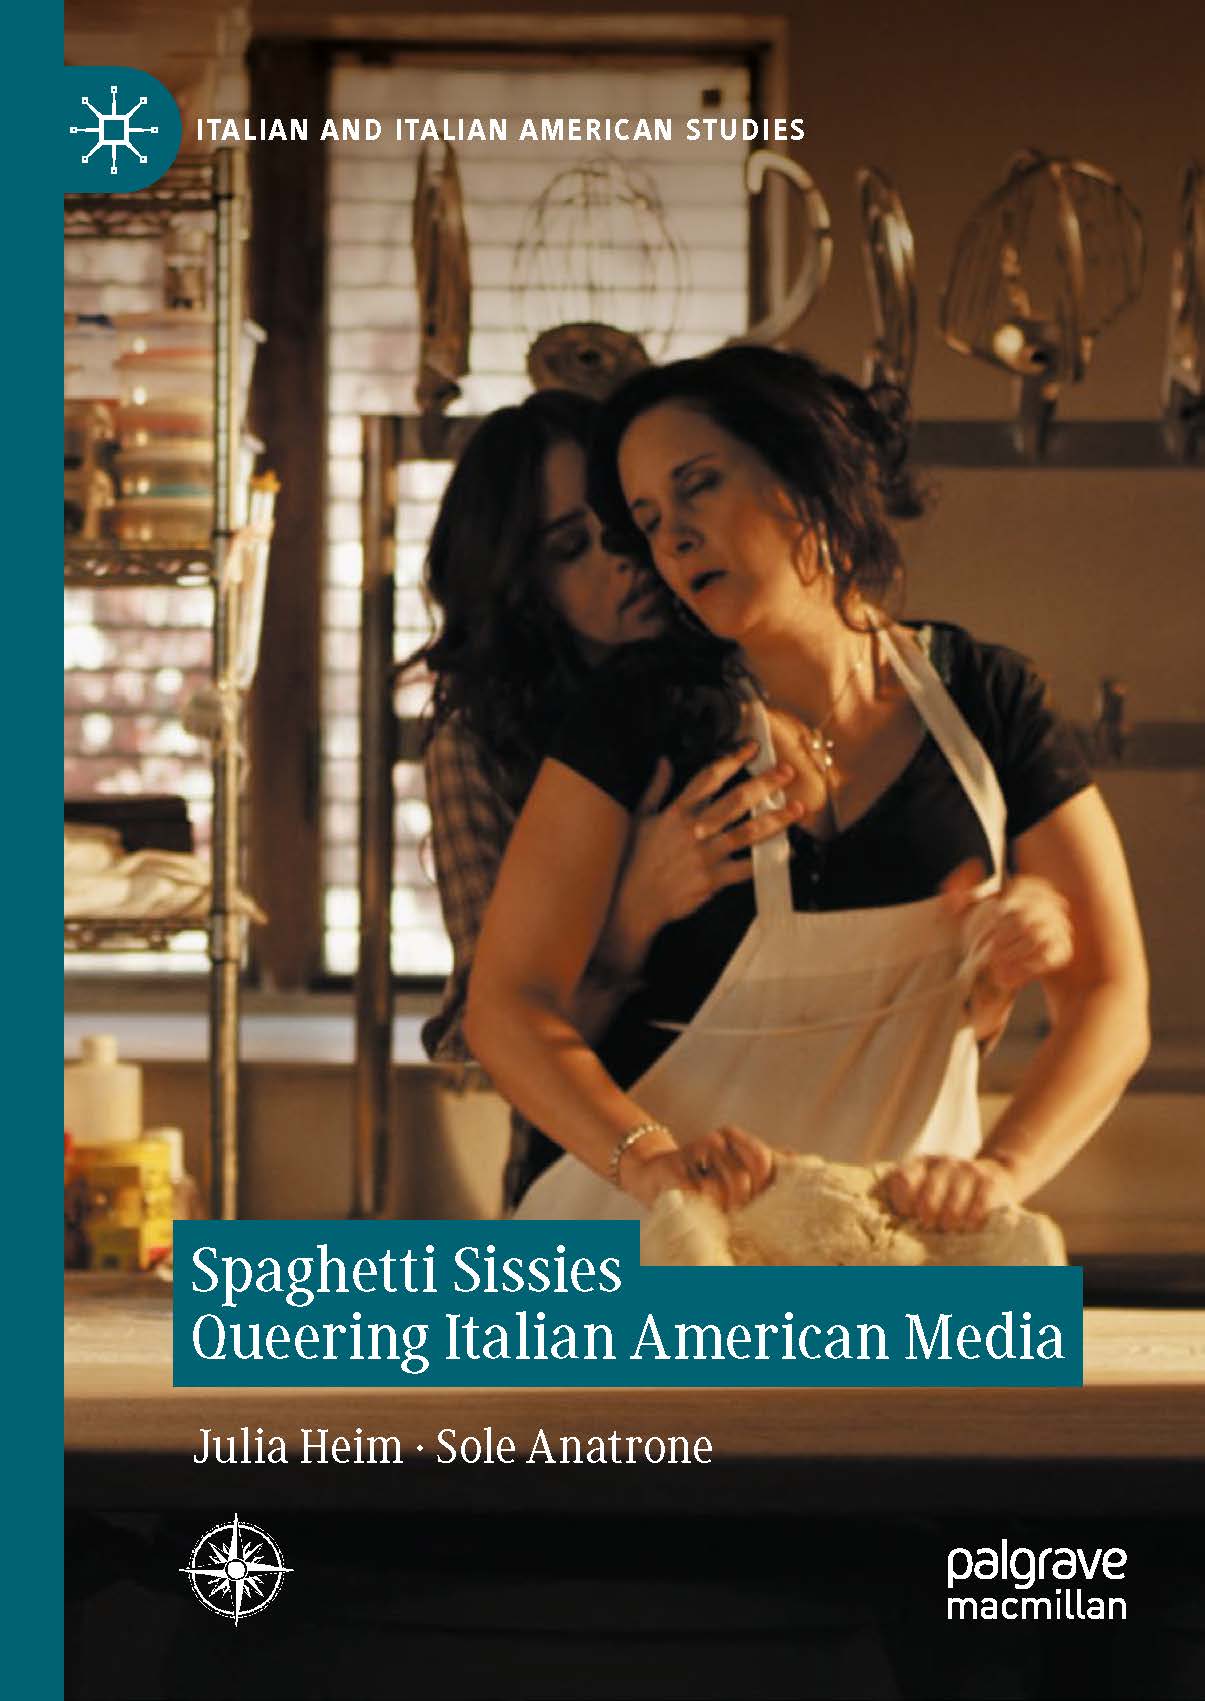 Spaghetti Sissies: Queering Italian American Media